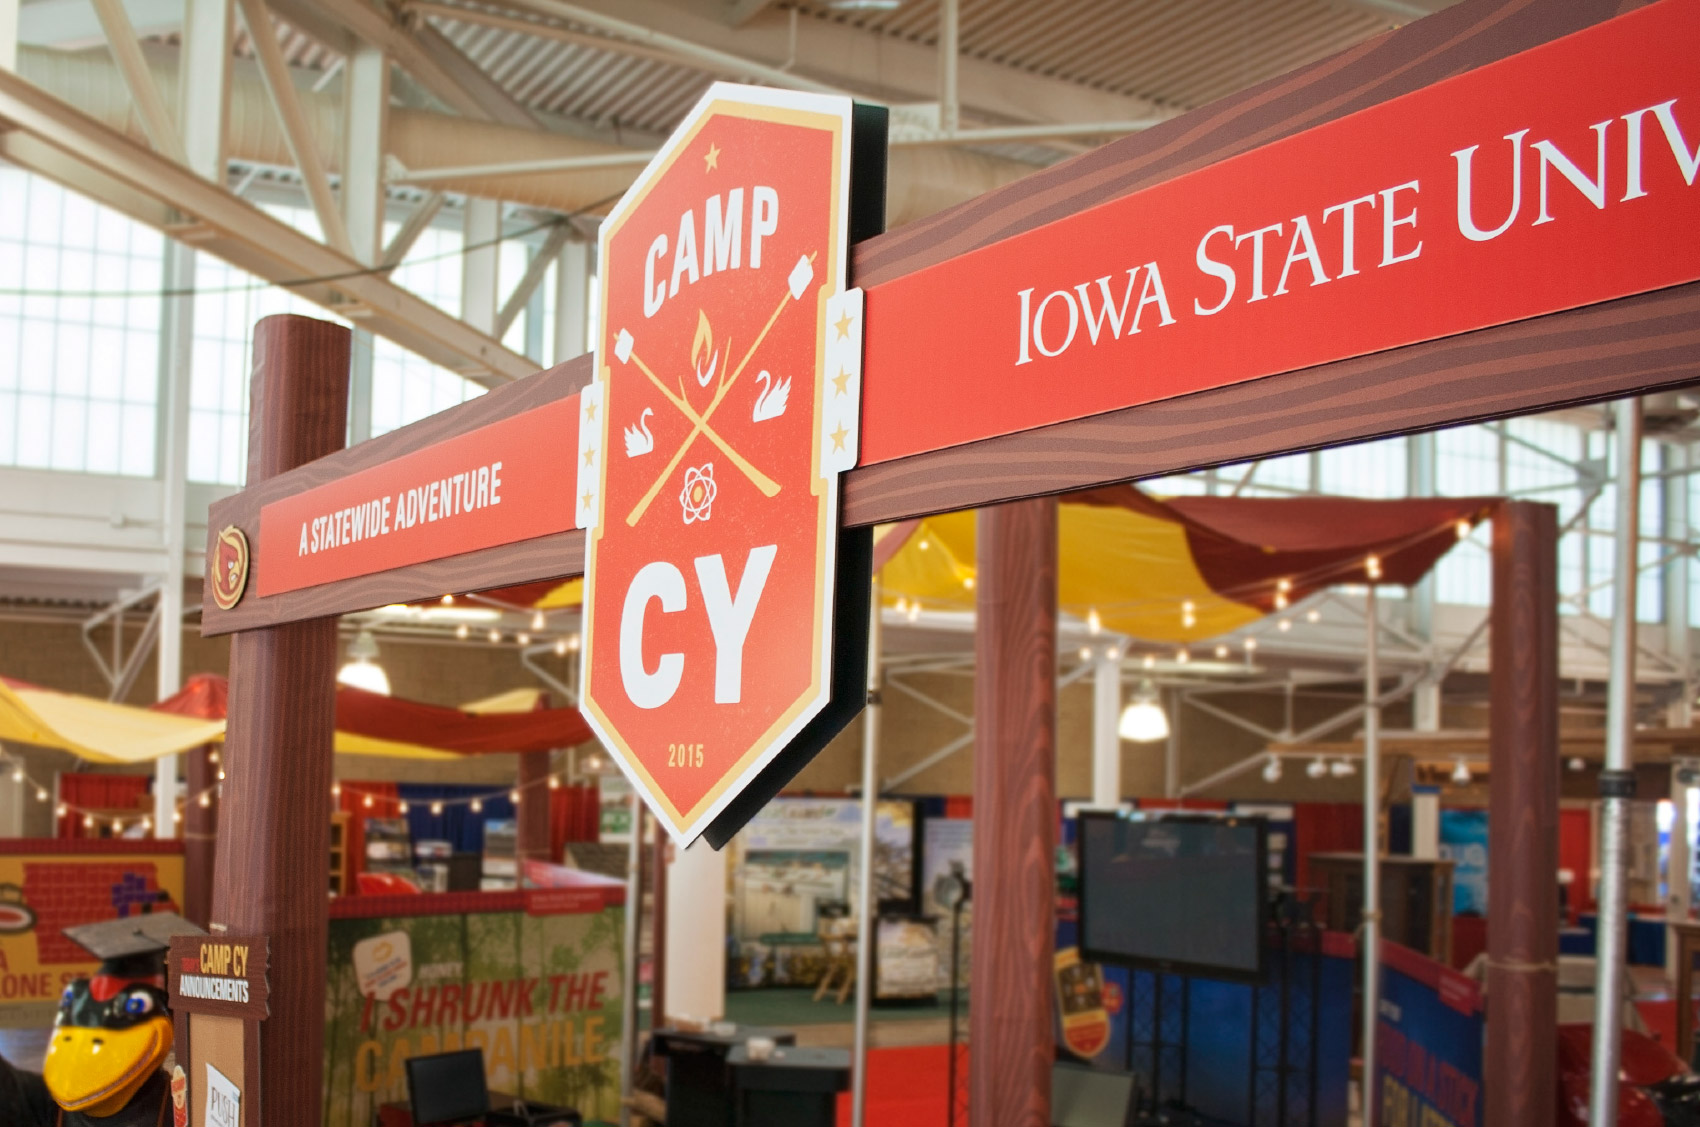 Iowa State University Camp CY